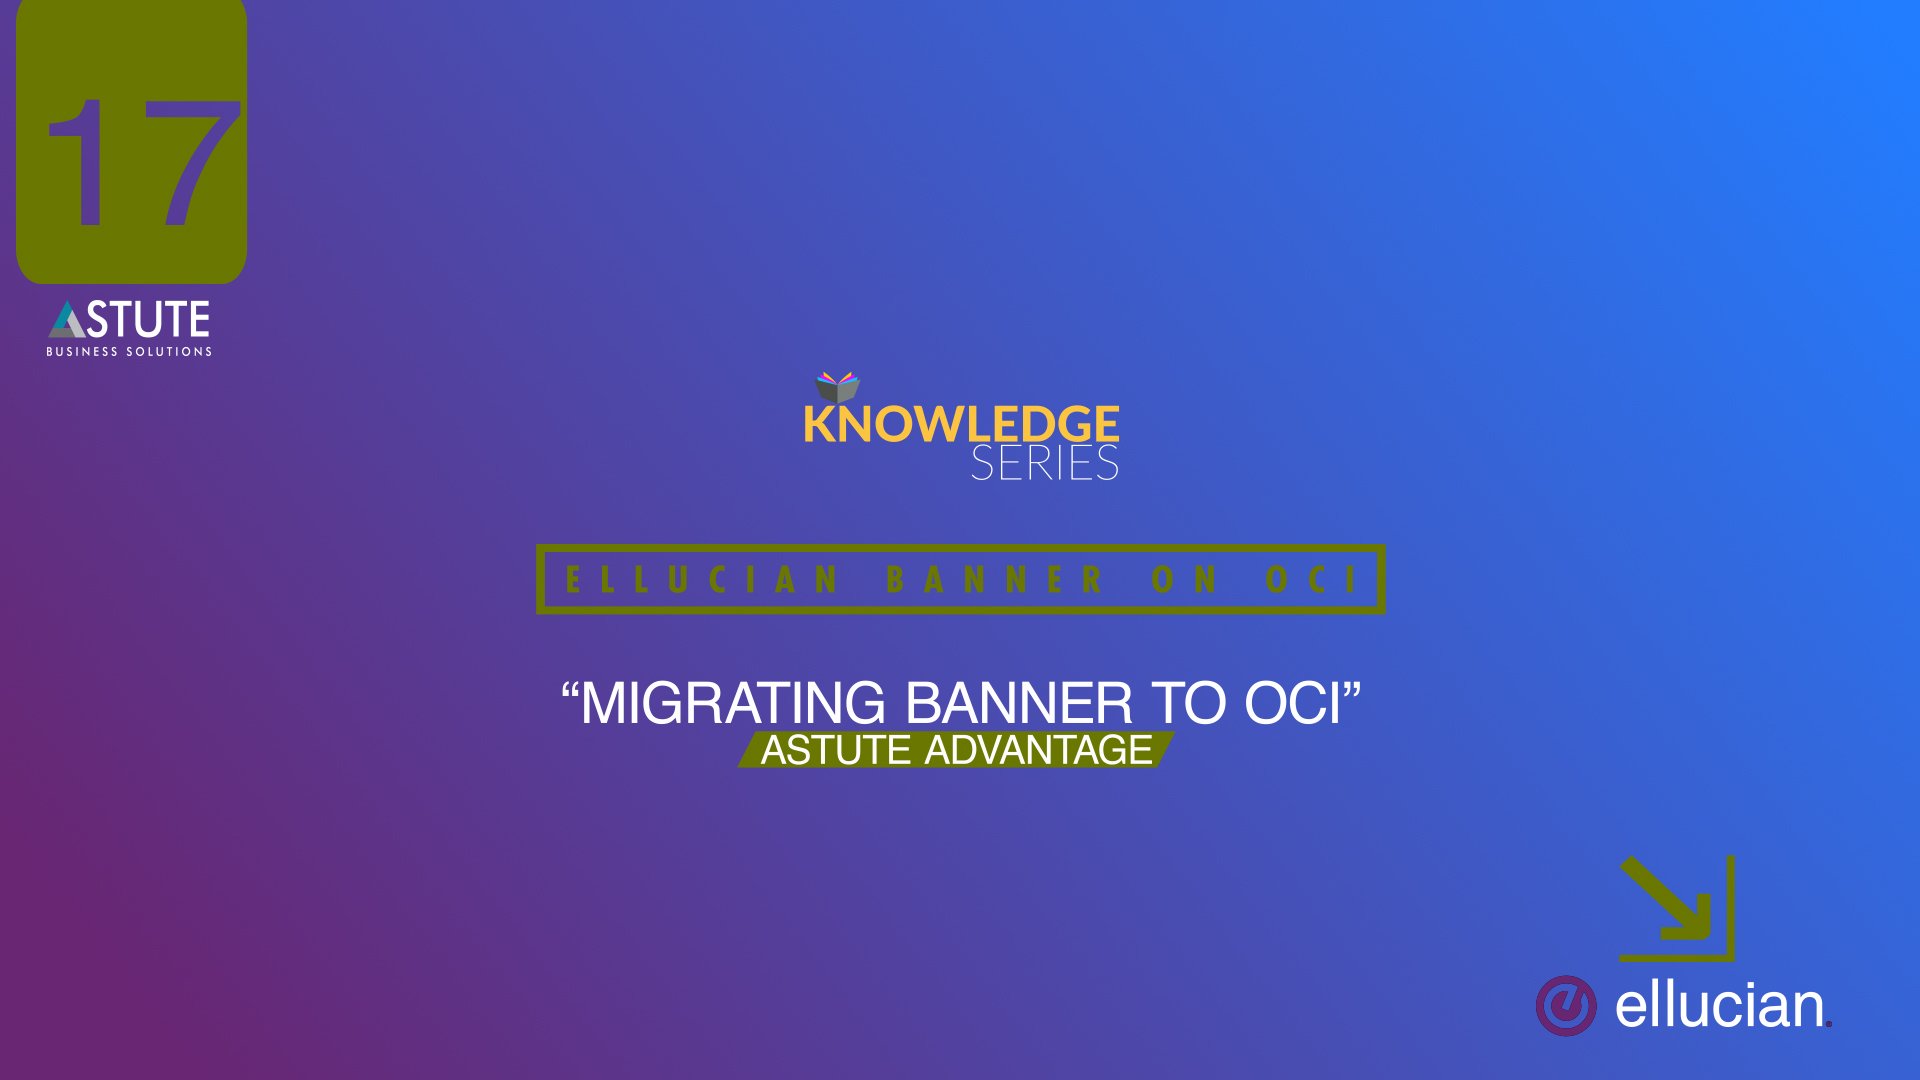 #17 Ellucian _Migrating Banner To OCI- Astute Advantage